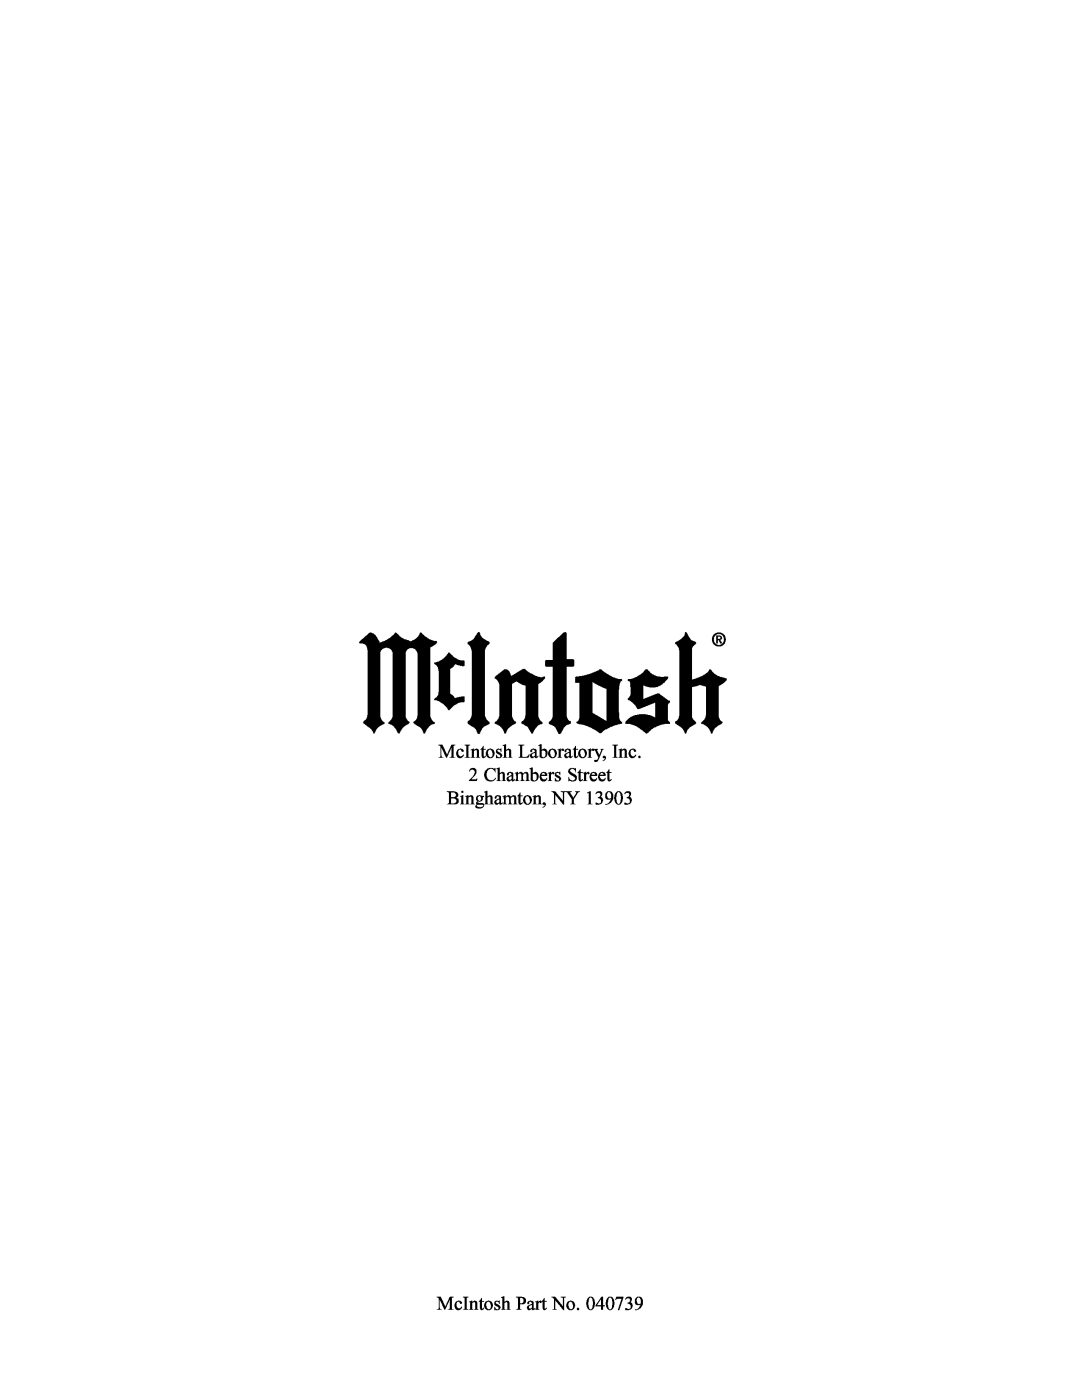 McIntosh PS112 manual McIntosh Laboratory, Inc 2 Chambers Street, Binghamton, NY, McIntosh Part No 